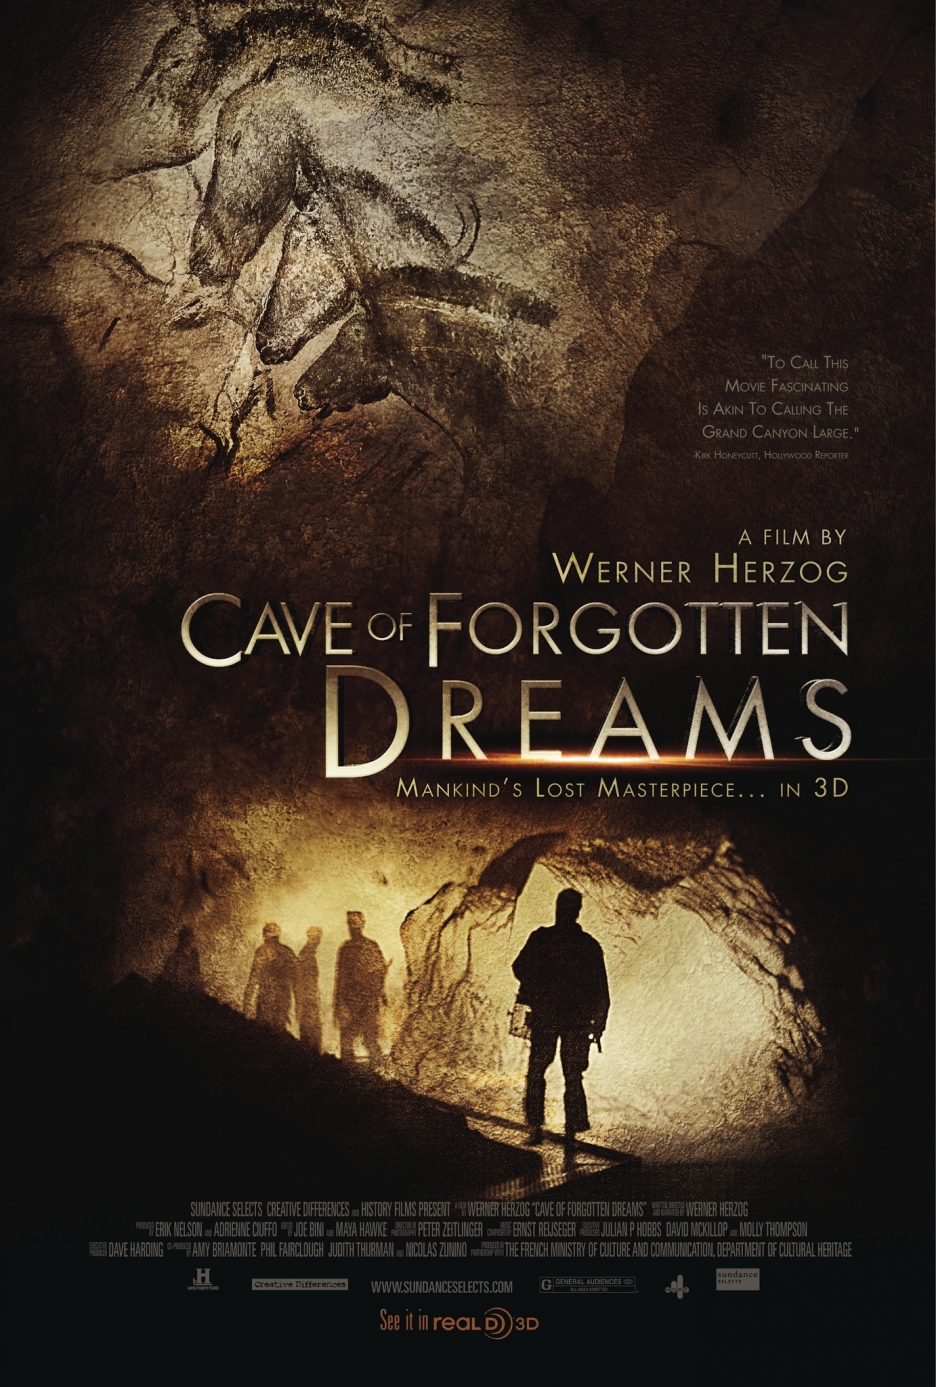 Werner-Herzog-Cave-of-Forgotten-Dreams-locandina-film